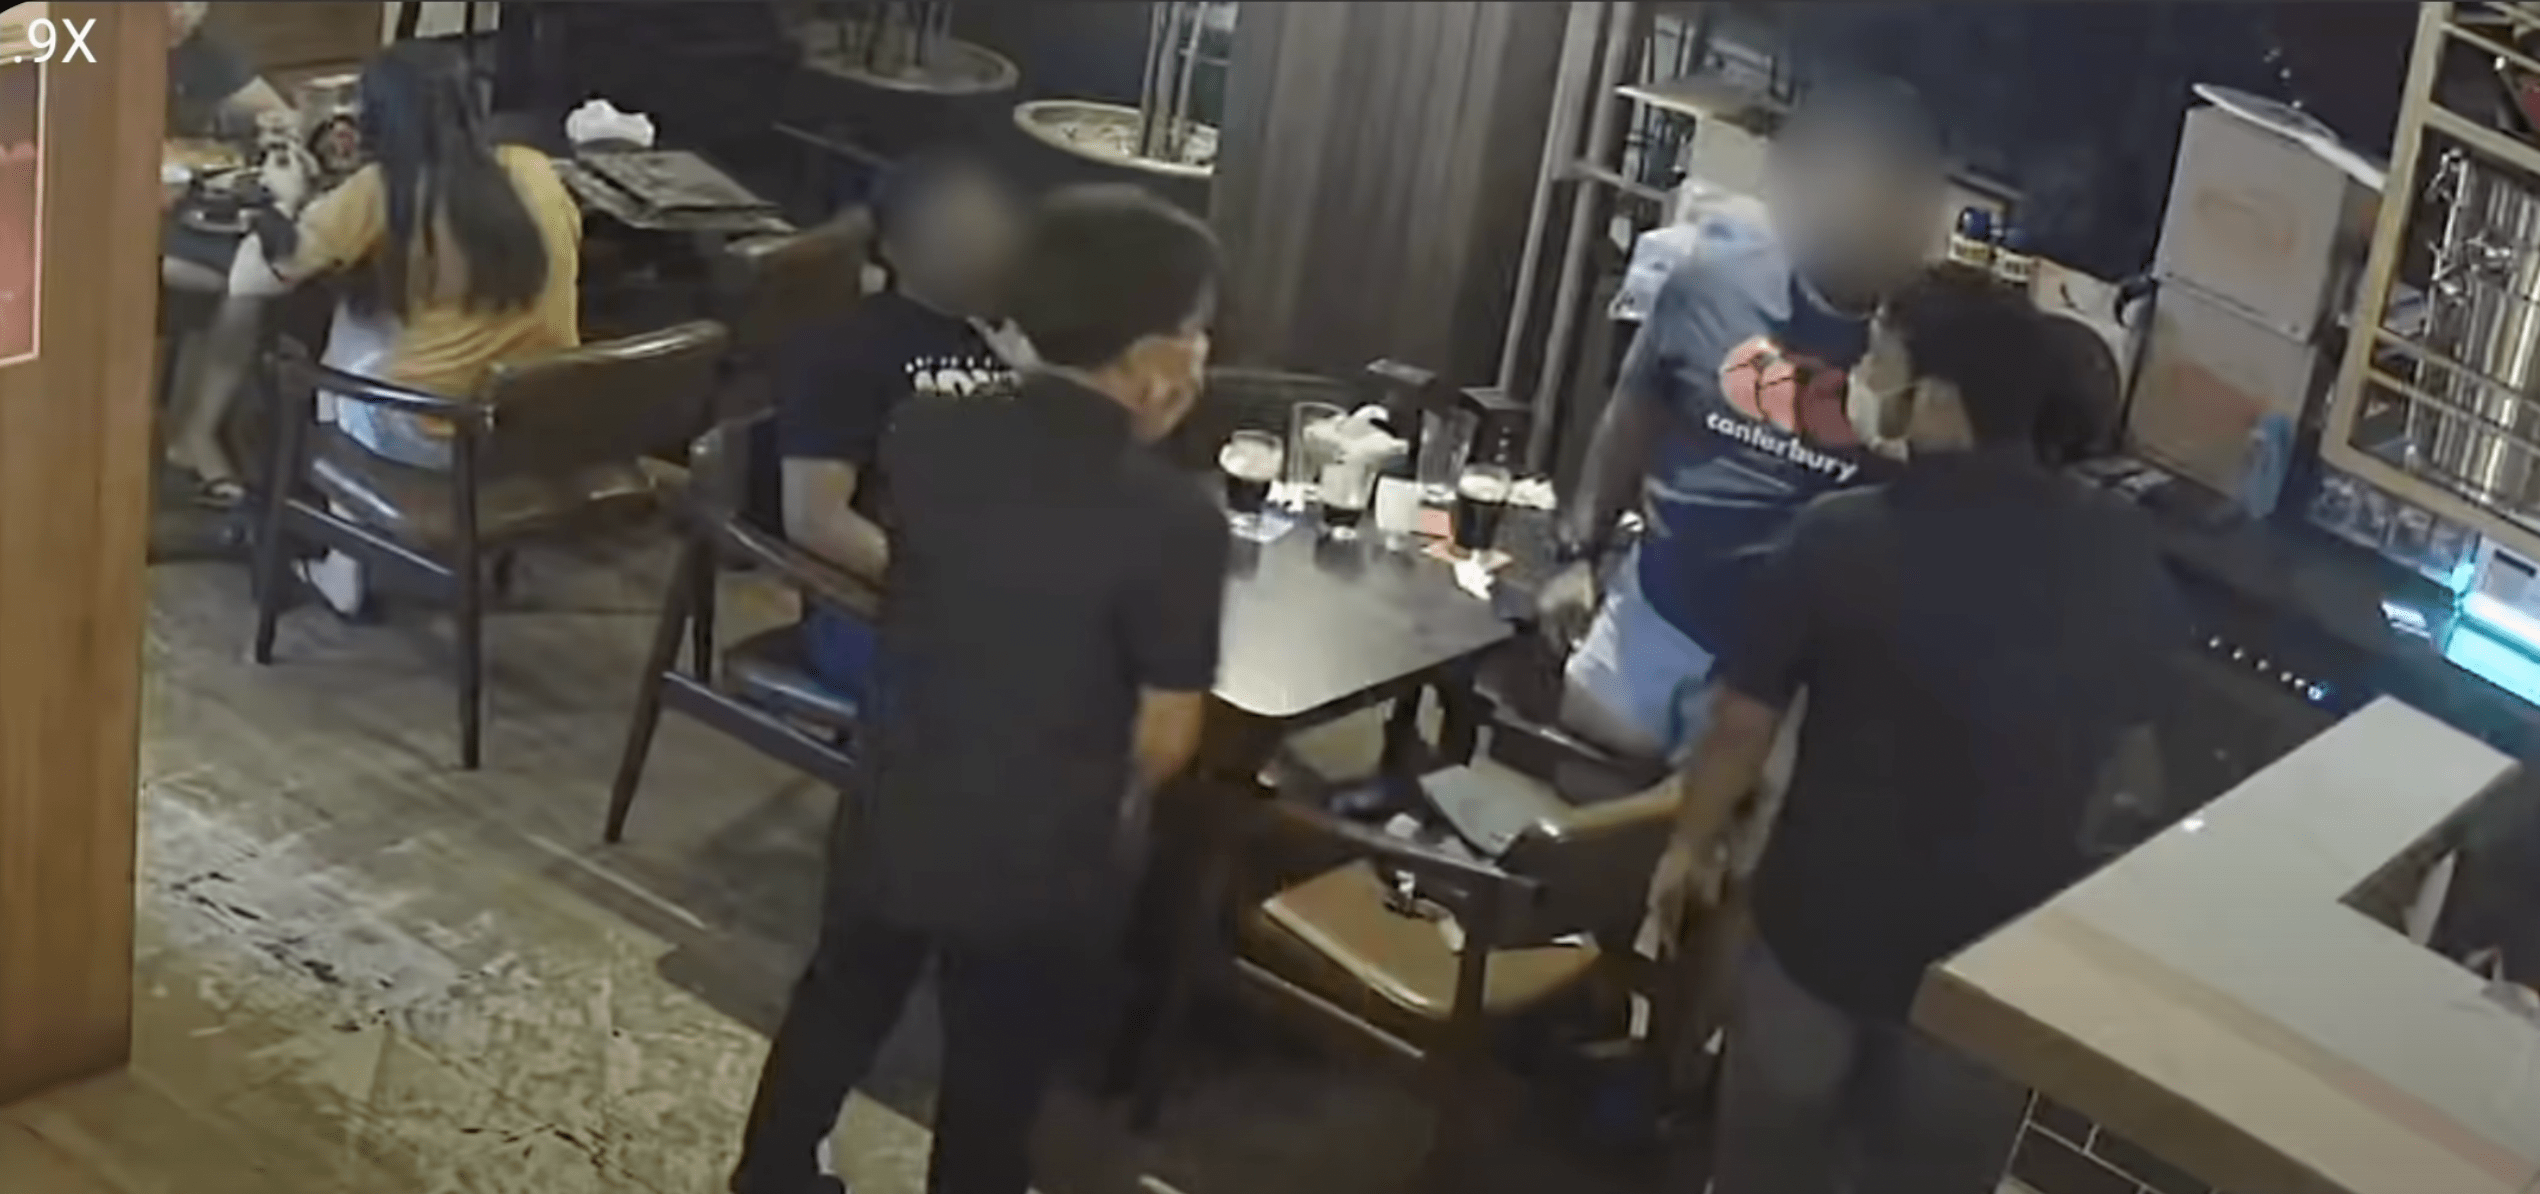 Customer slaps waiter for refusing to play tamil songs at a restaurant in subang jaya 05